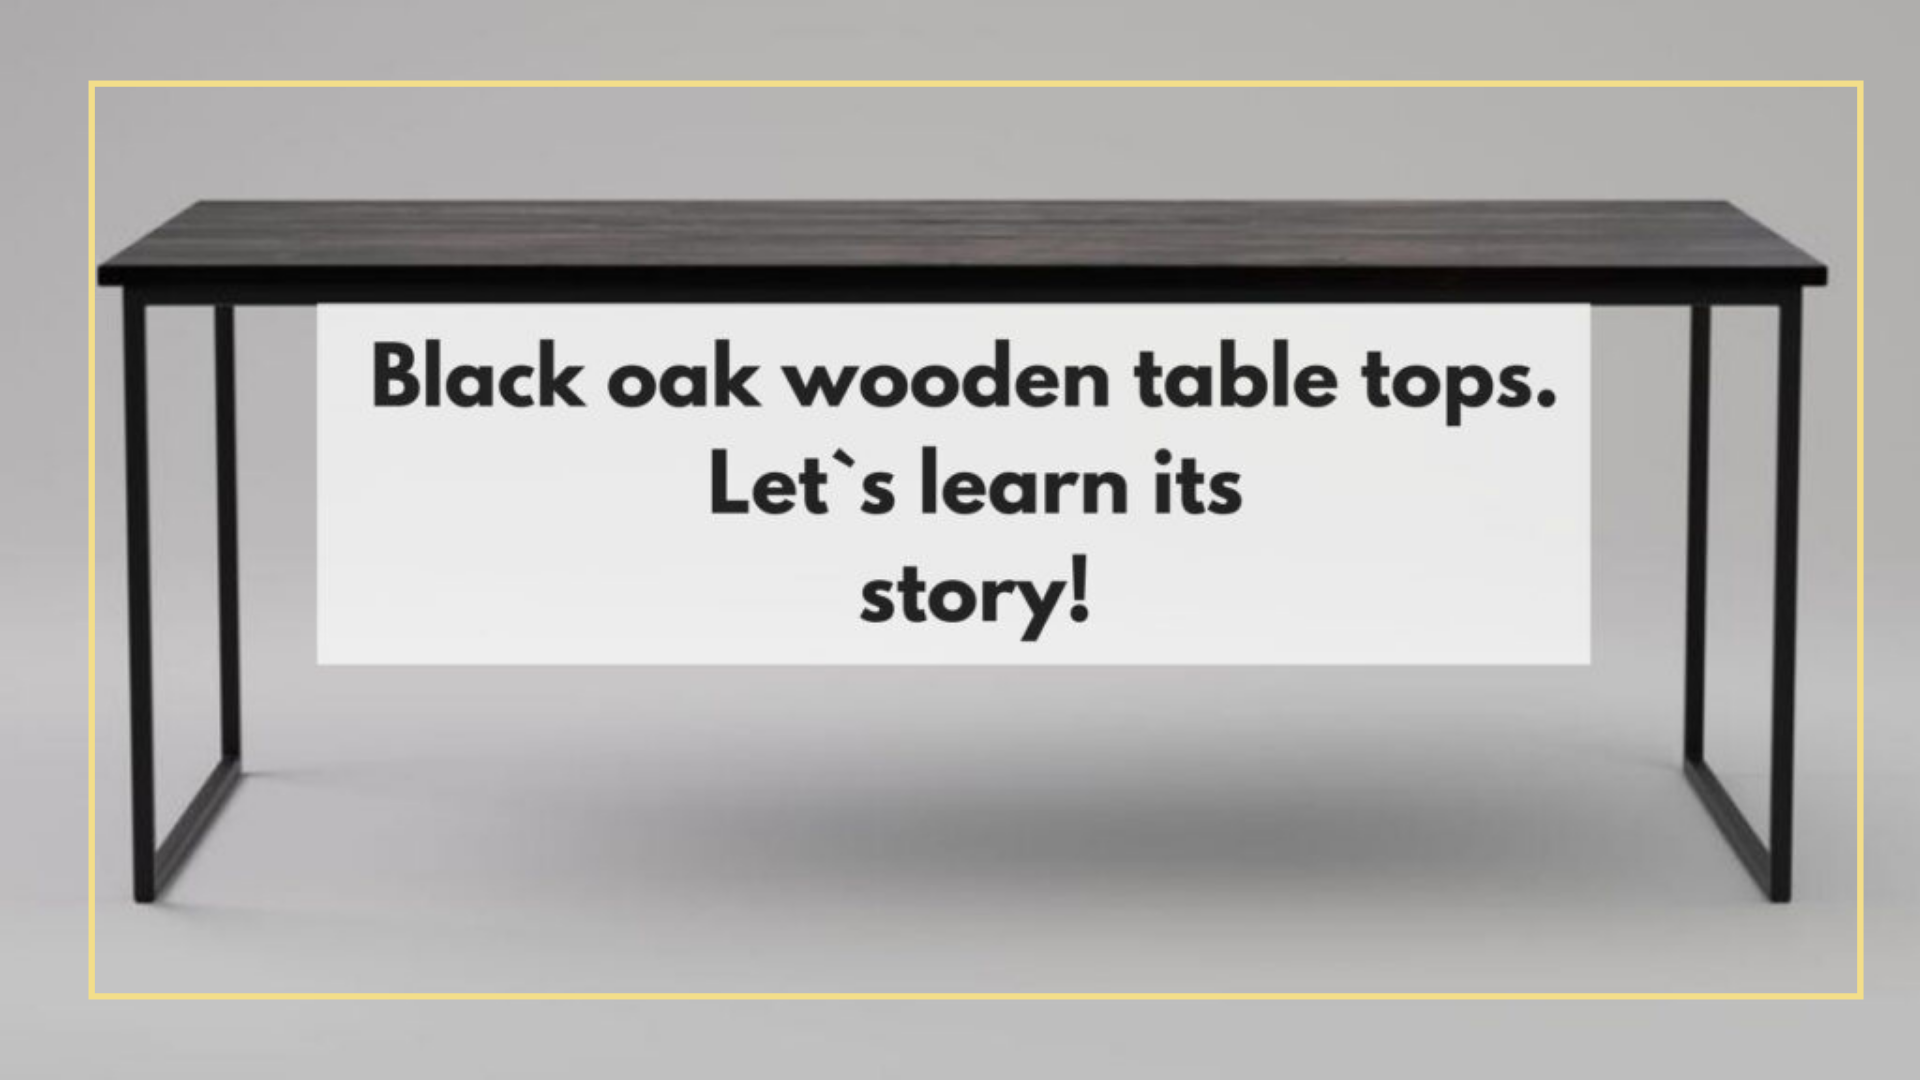 Black oak wooden table tops. Let's learn its story